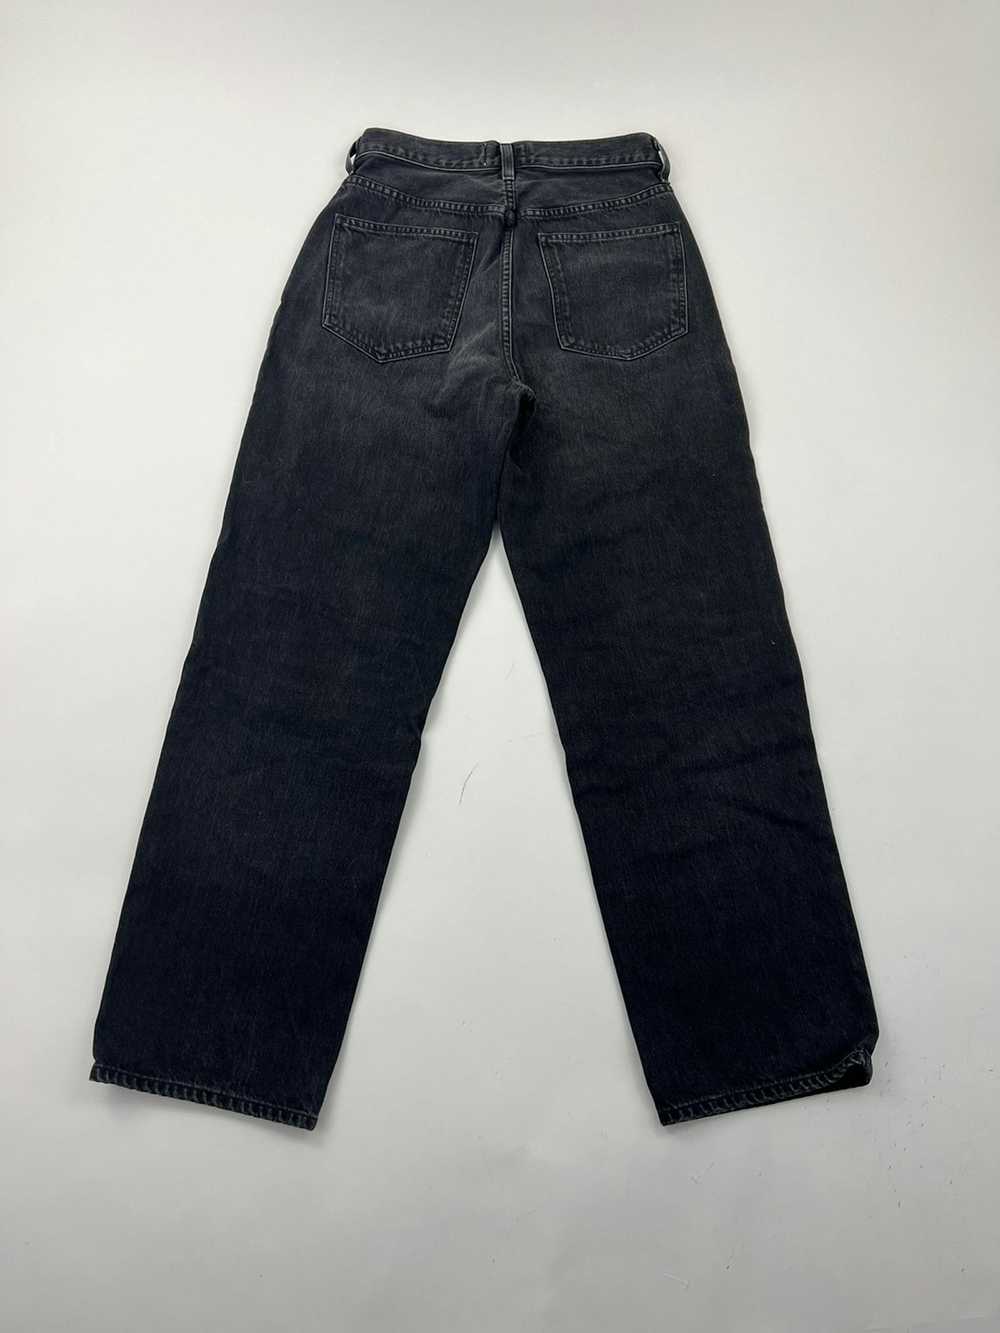 Agolde Agolde Black CrissCross Jeans - image 4